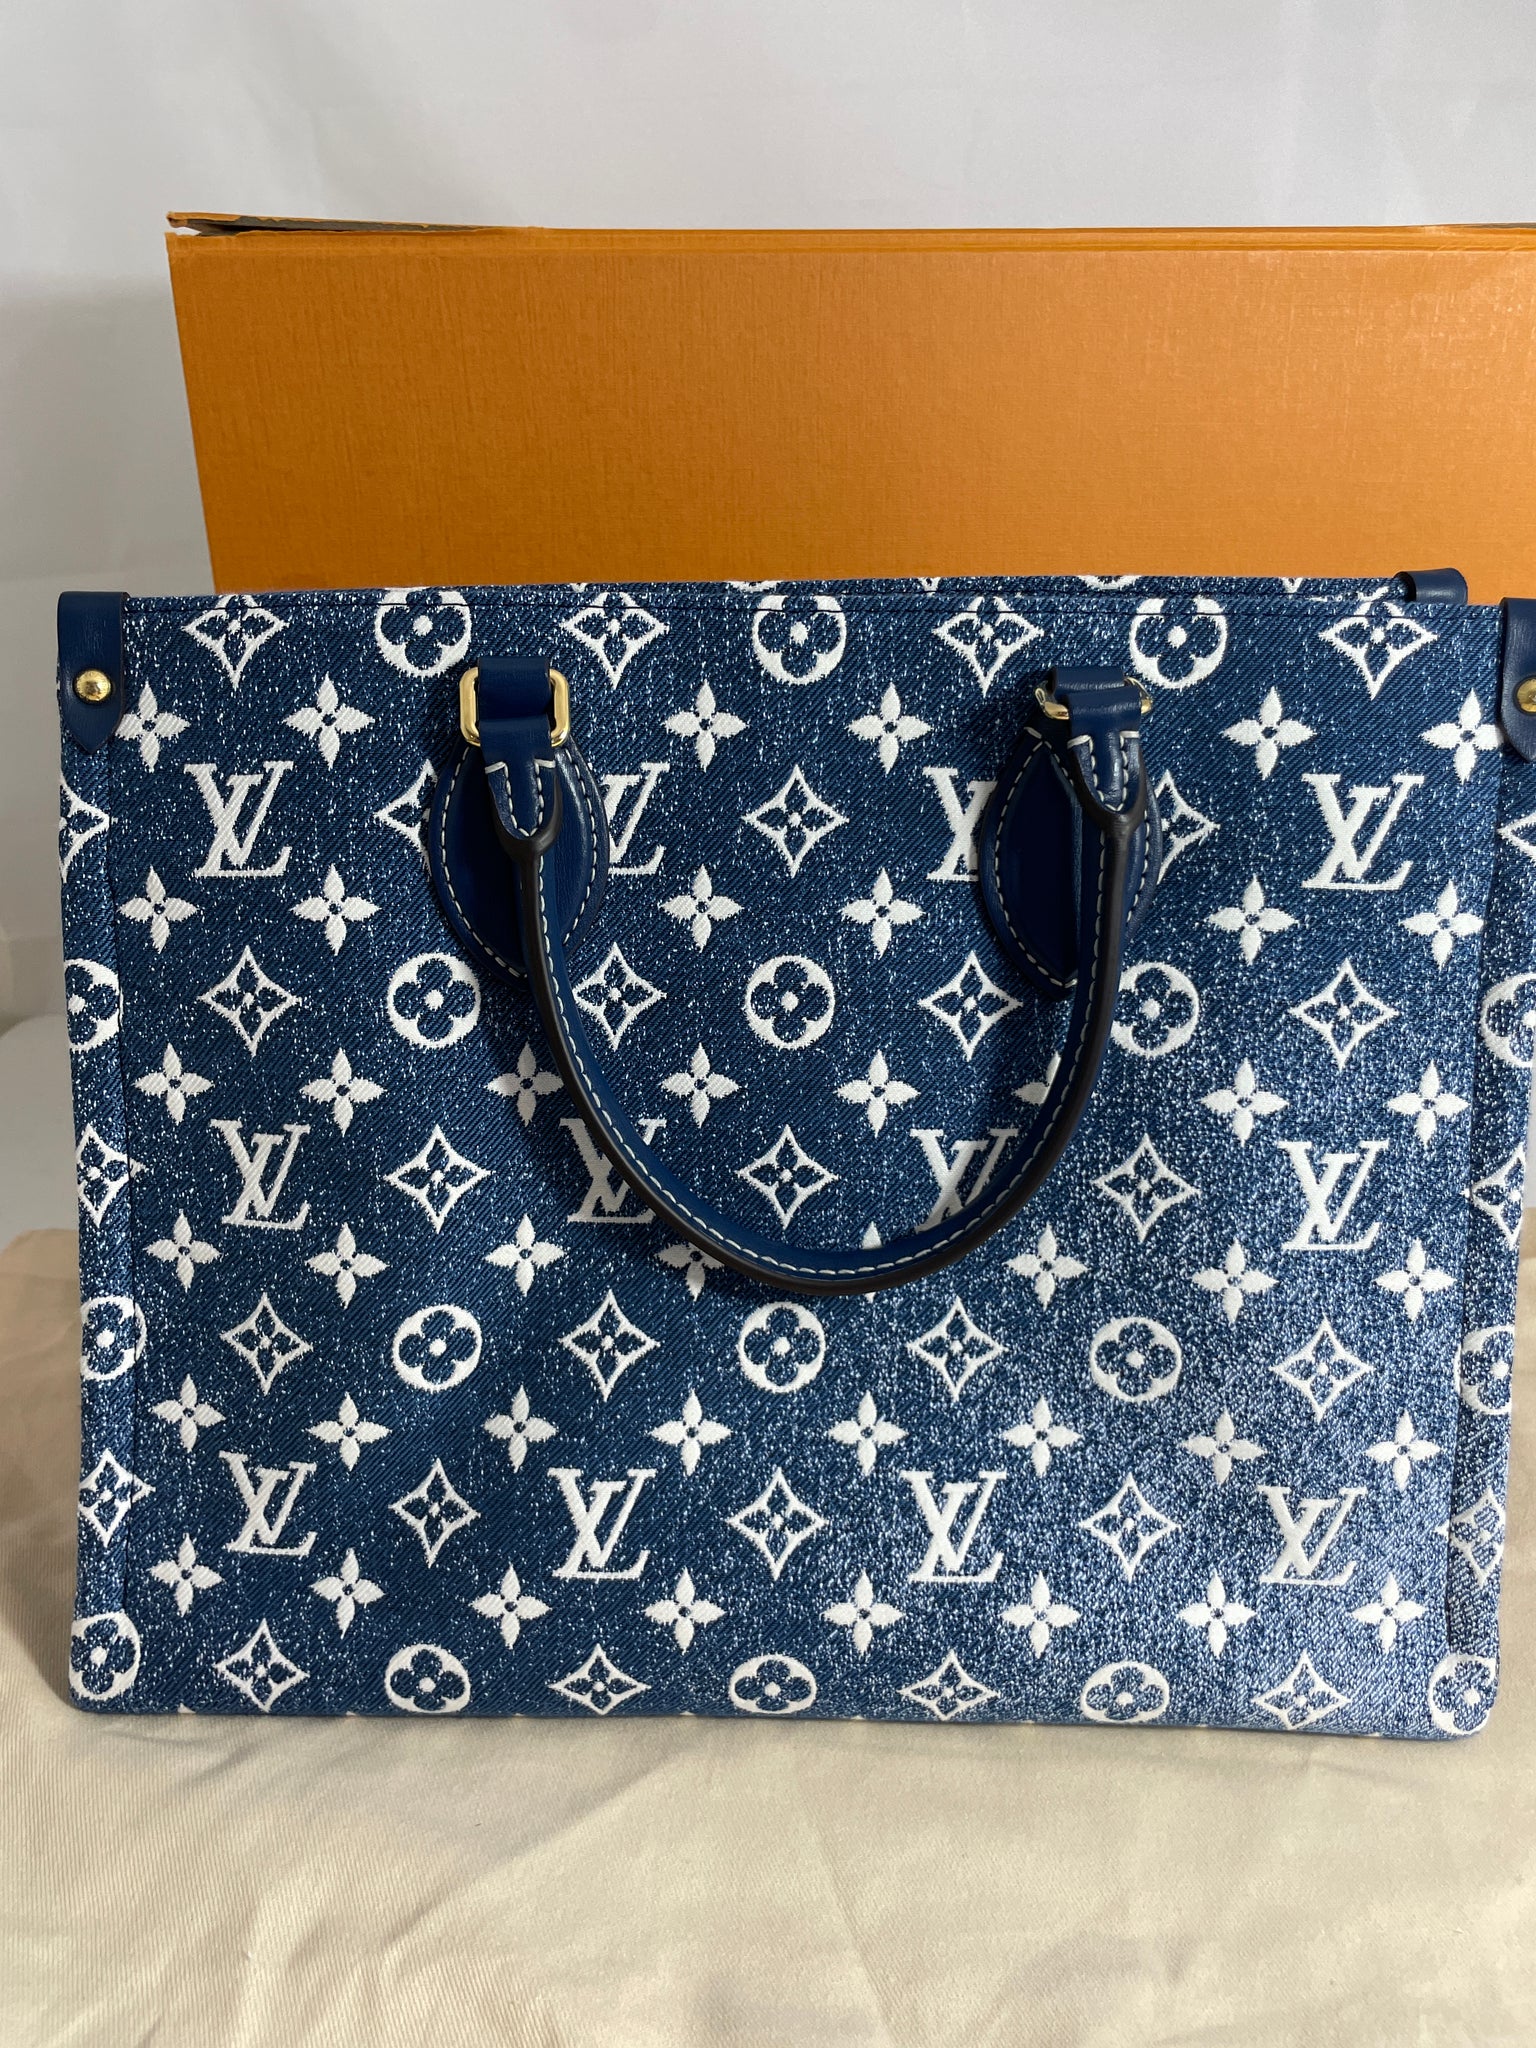 M59608 Louis Vuitton Monogram Denim OnTheGo MM Tote Bag